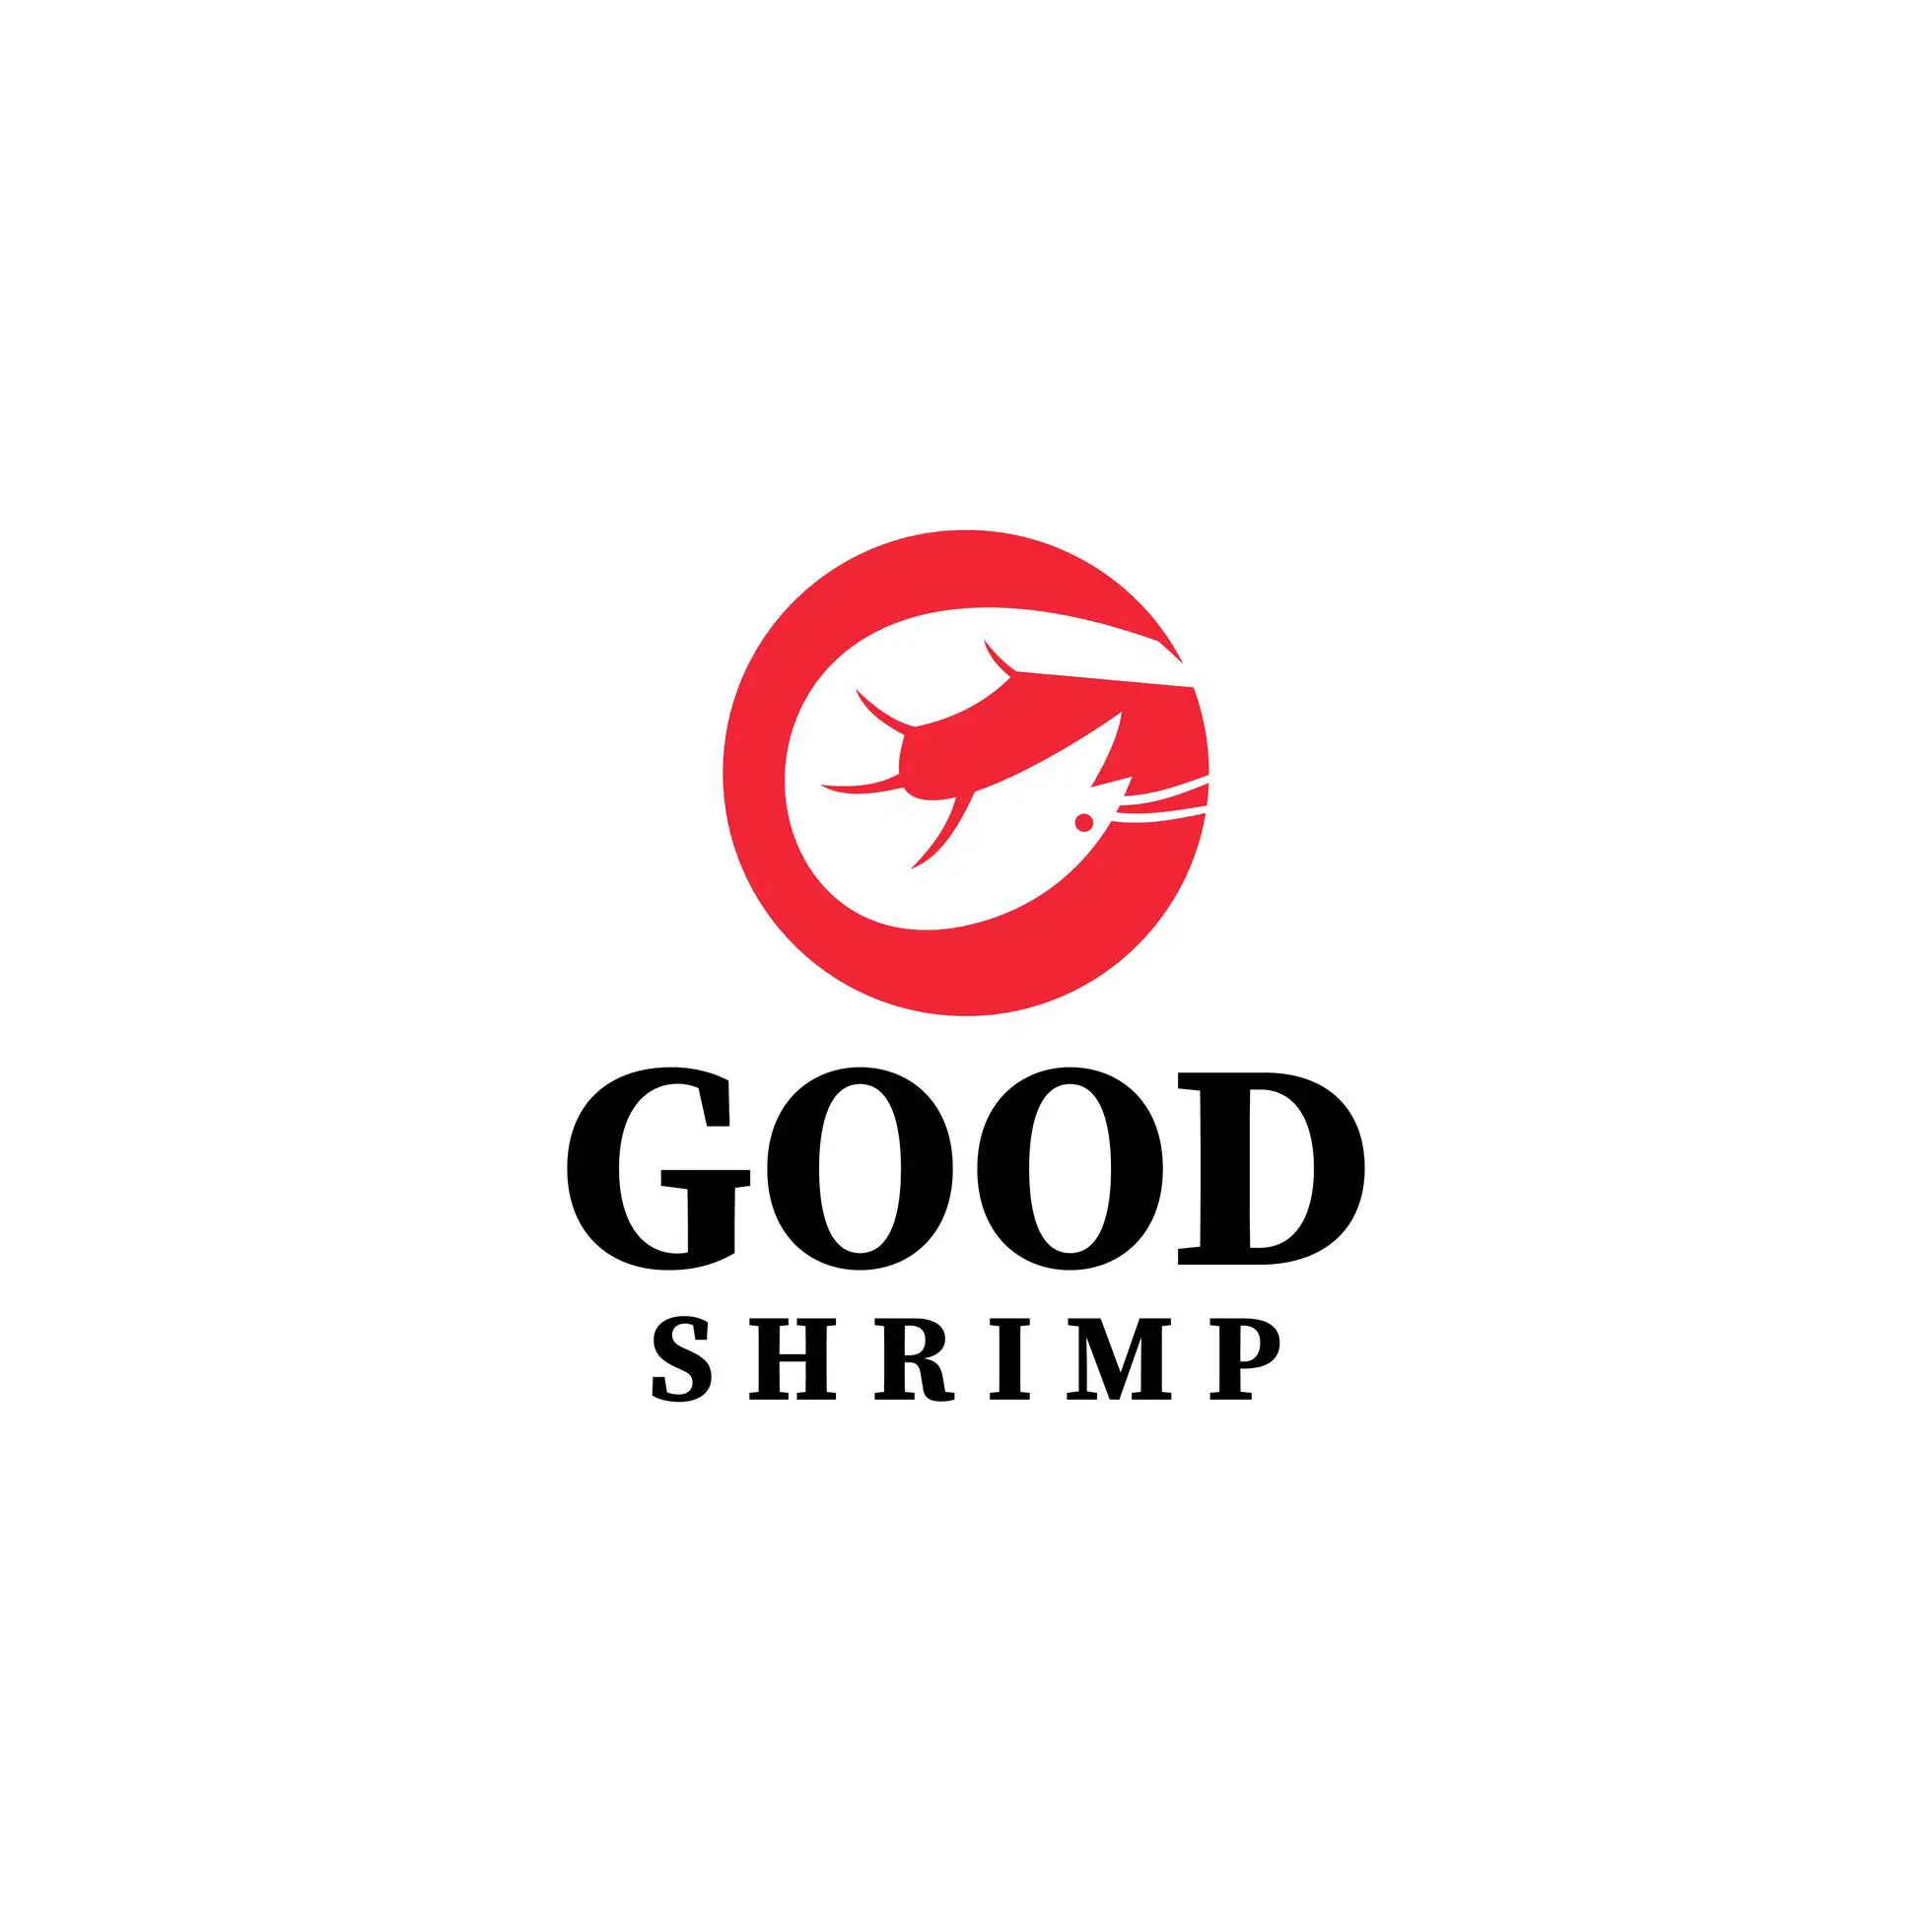 Shrimp food logo sea food design illustration. 3032446 Vector Art at ...